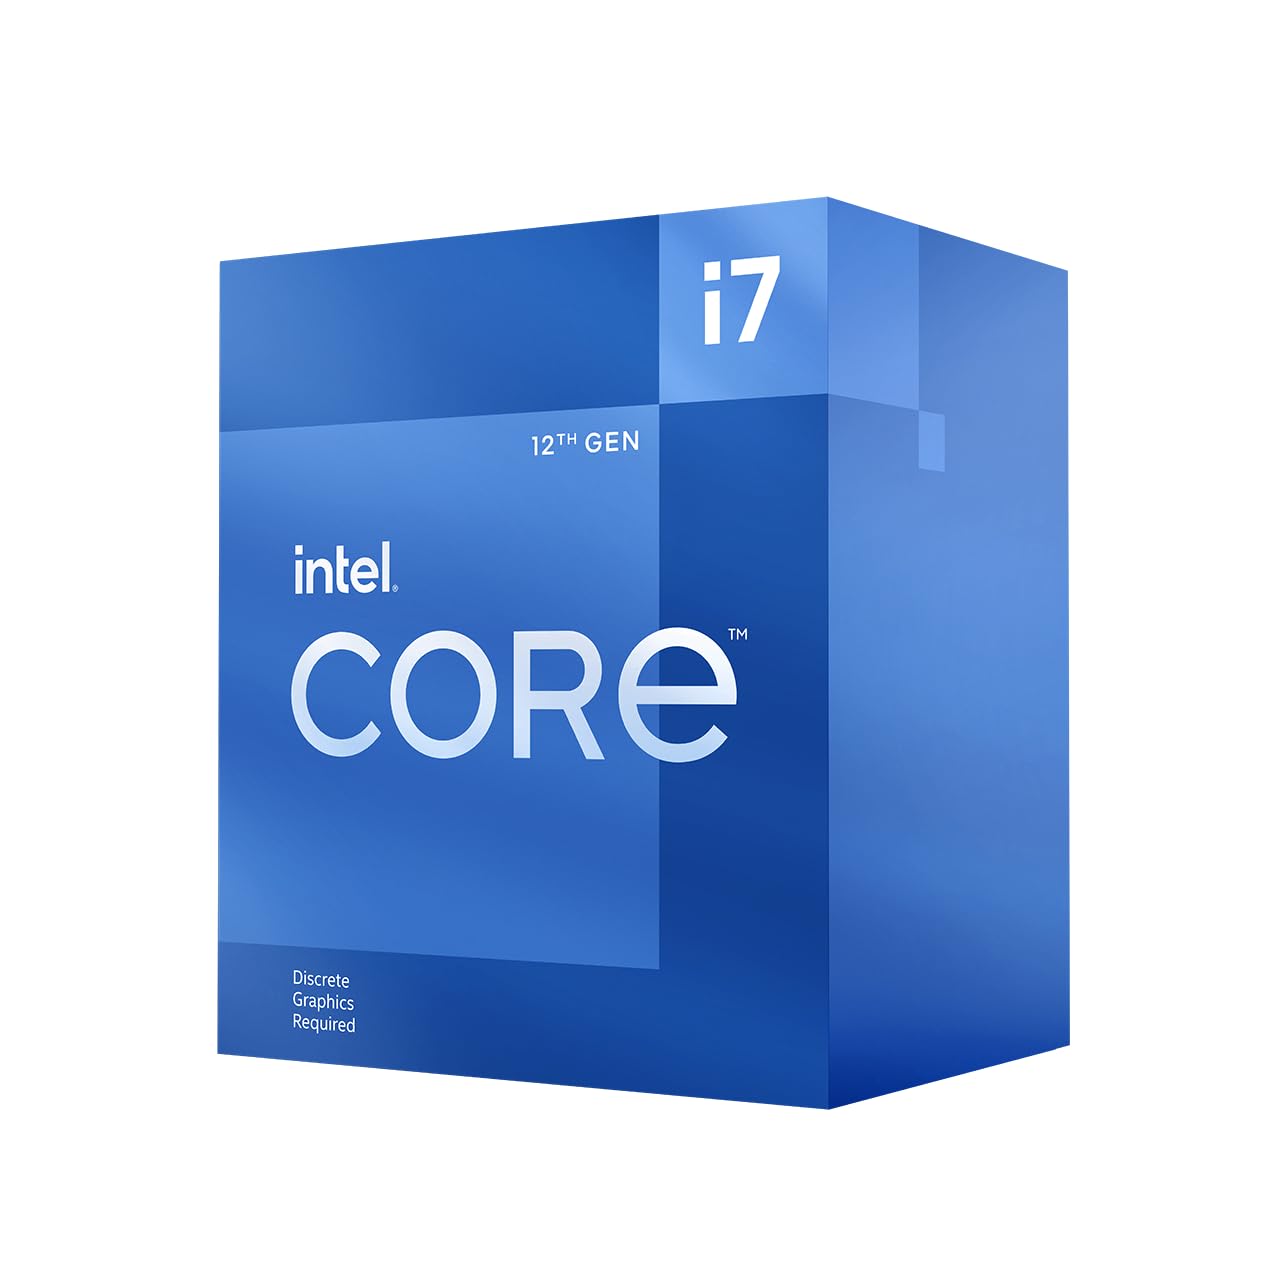 Intel Core i7-12700F 12th Gen Desktop Processor, 12 Cores, 20 Threads, 25 MB Cache, 4.90 GHz Turbo Boost Max, DDR5/DDR4 Memory Support, 65W TDP, LGA-1700 Socket - Alder Lake Series by Intel